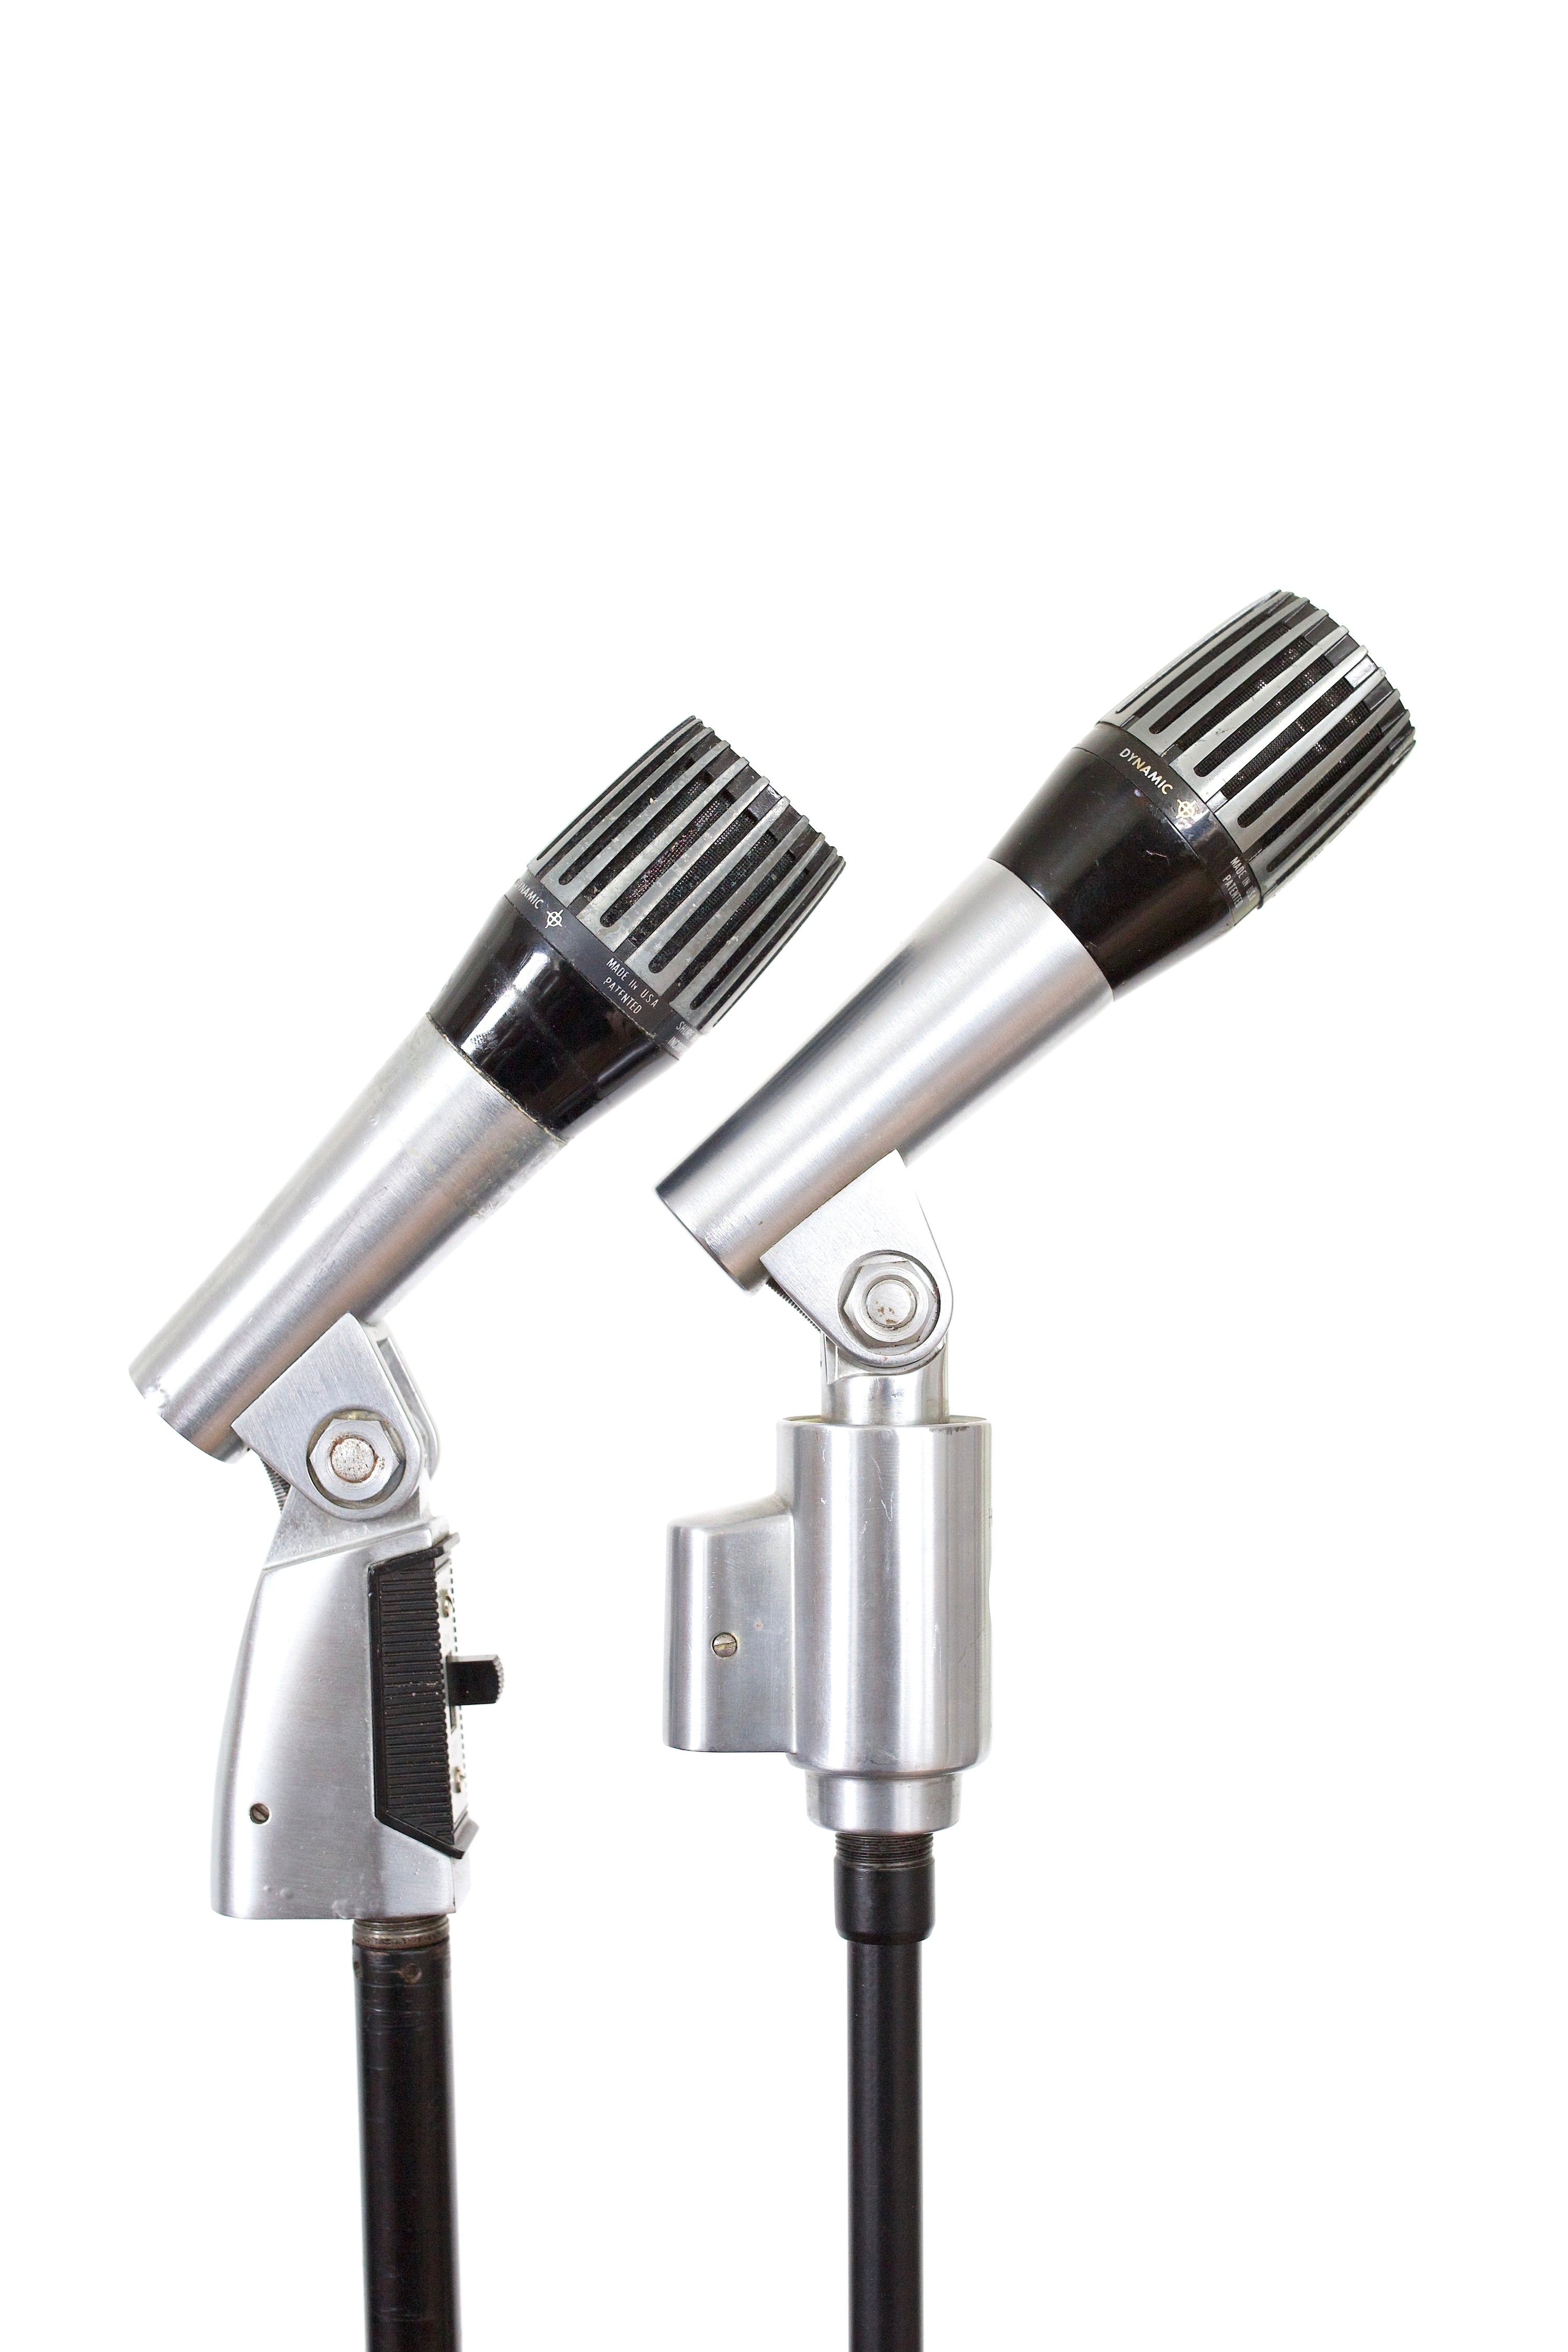 Shure 548S / 549 Unidyne IV Dynamic Microphone